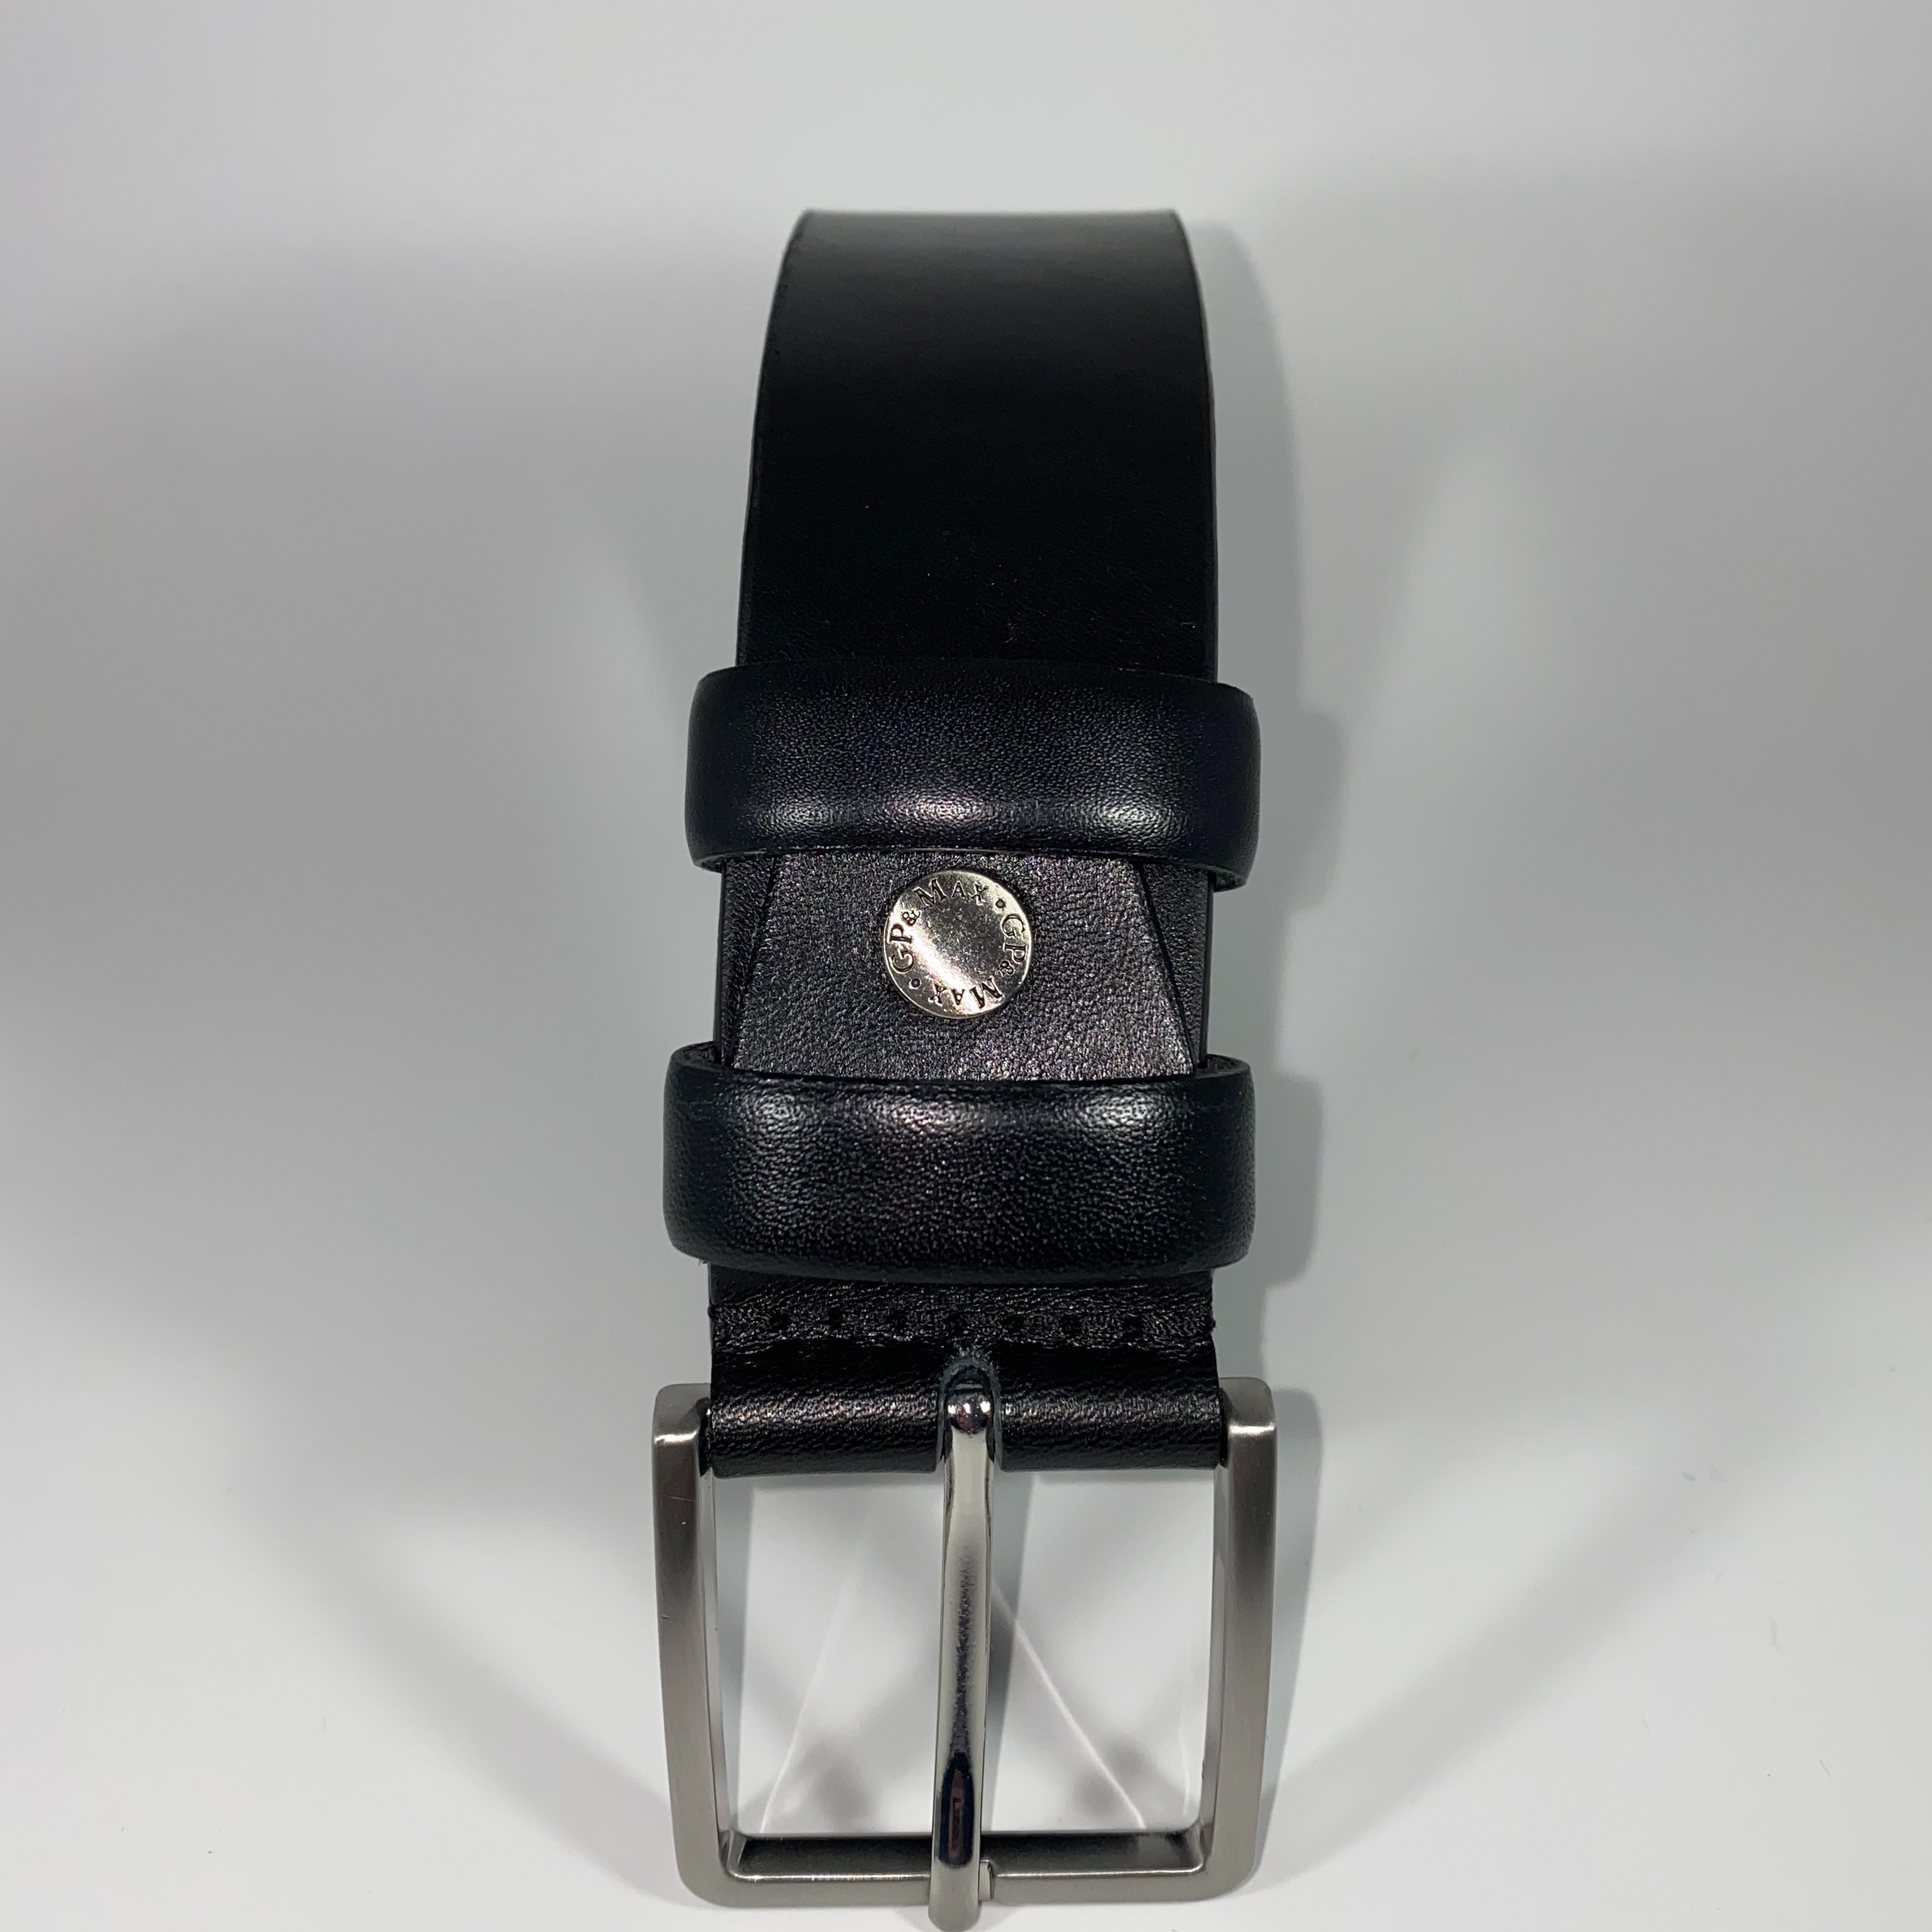 Cintura In Pelle 100% Made In Italy 1740/40